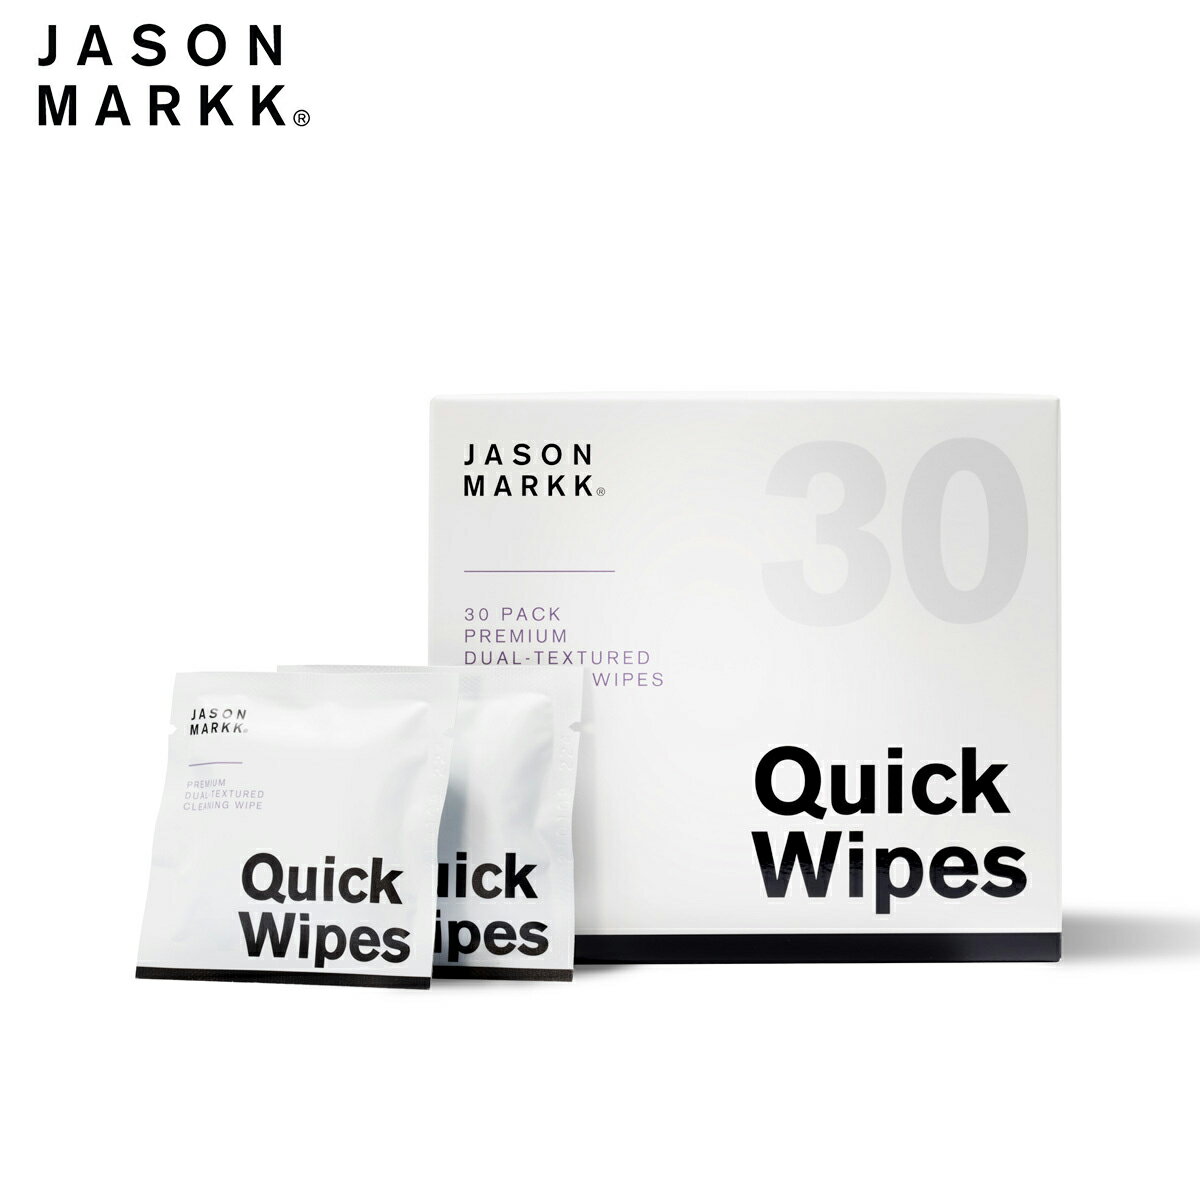 JASON MARKK QUICK WIPES - 30 PACK 拭き取る